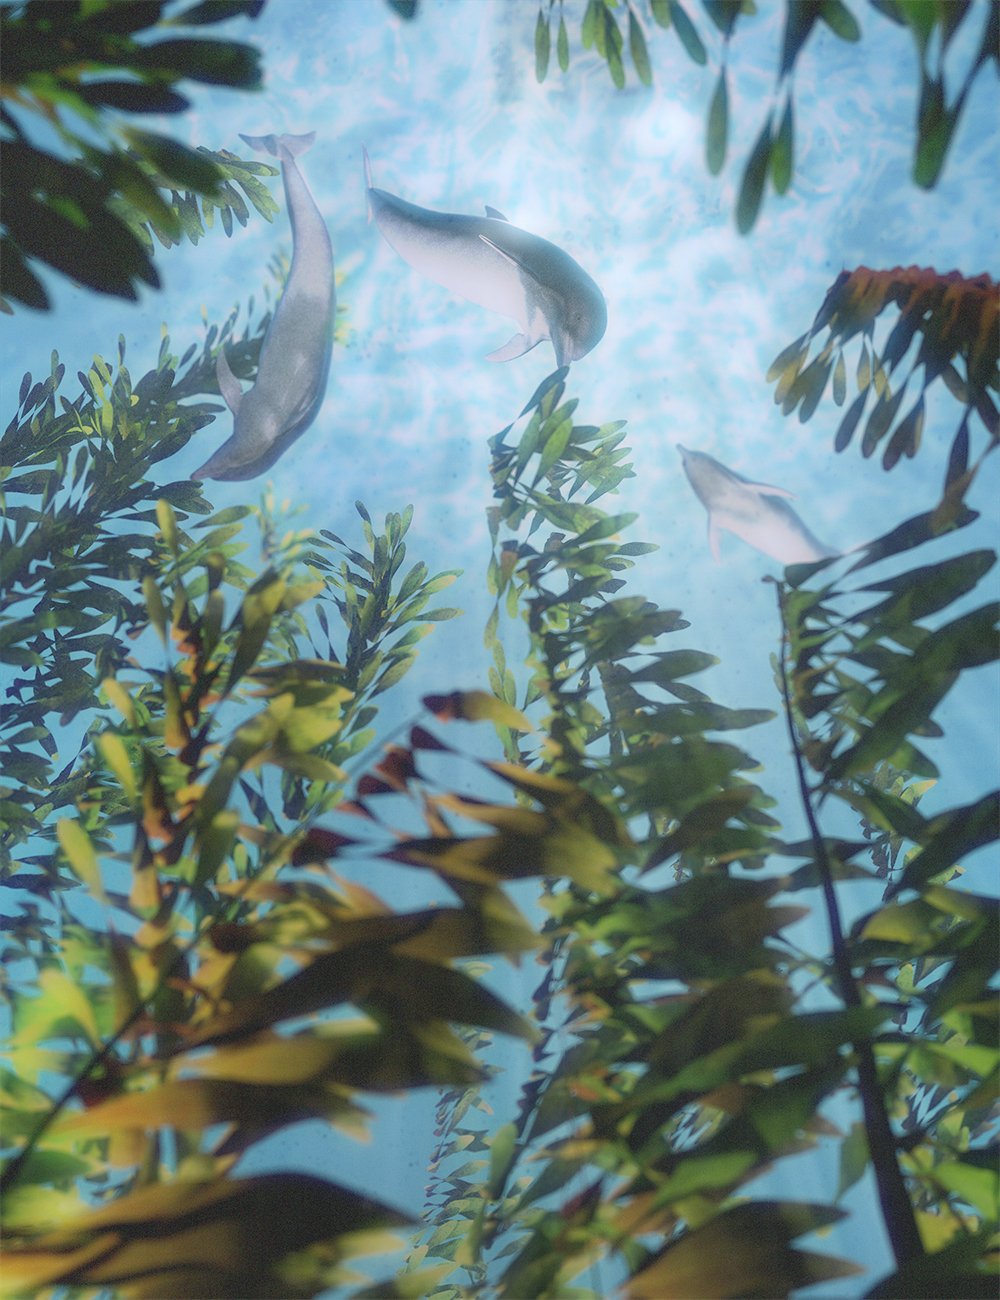 Just Beachy - Underwater Kelp Forest